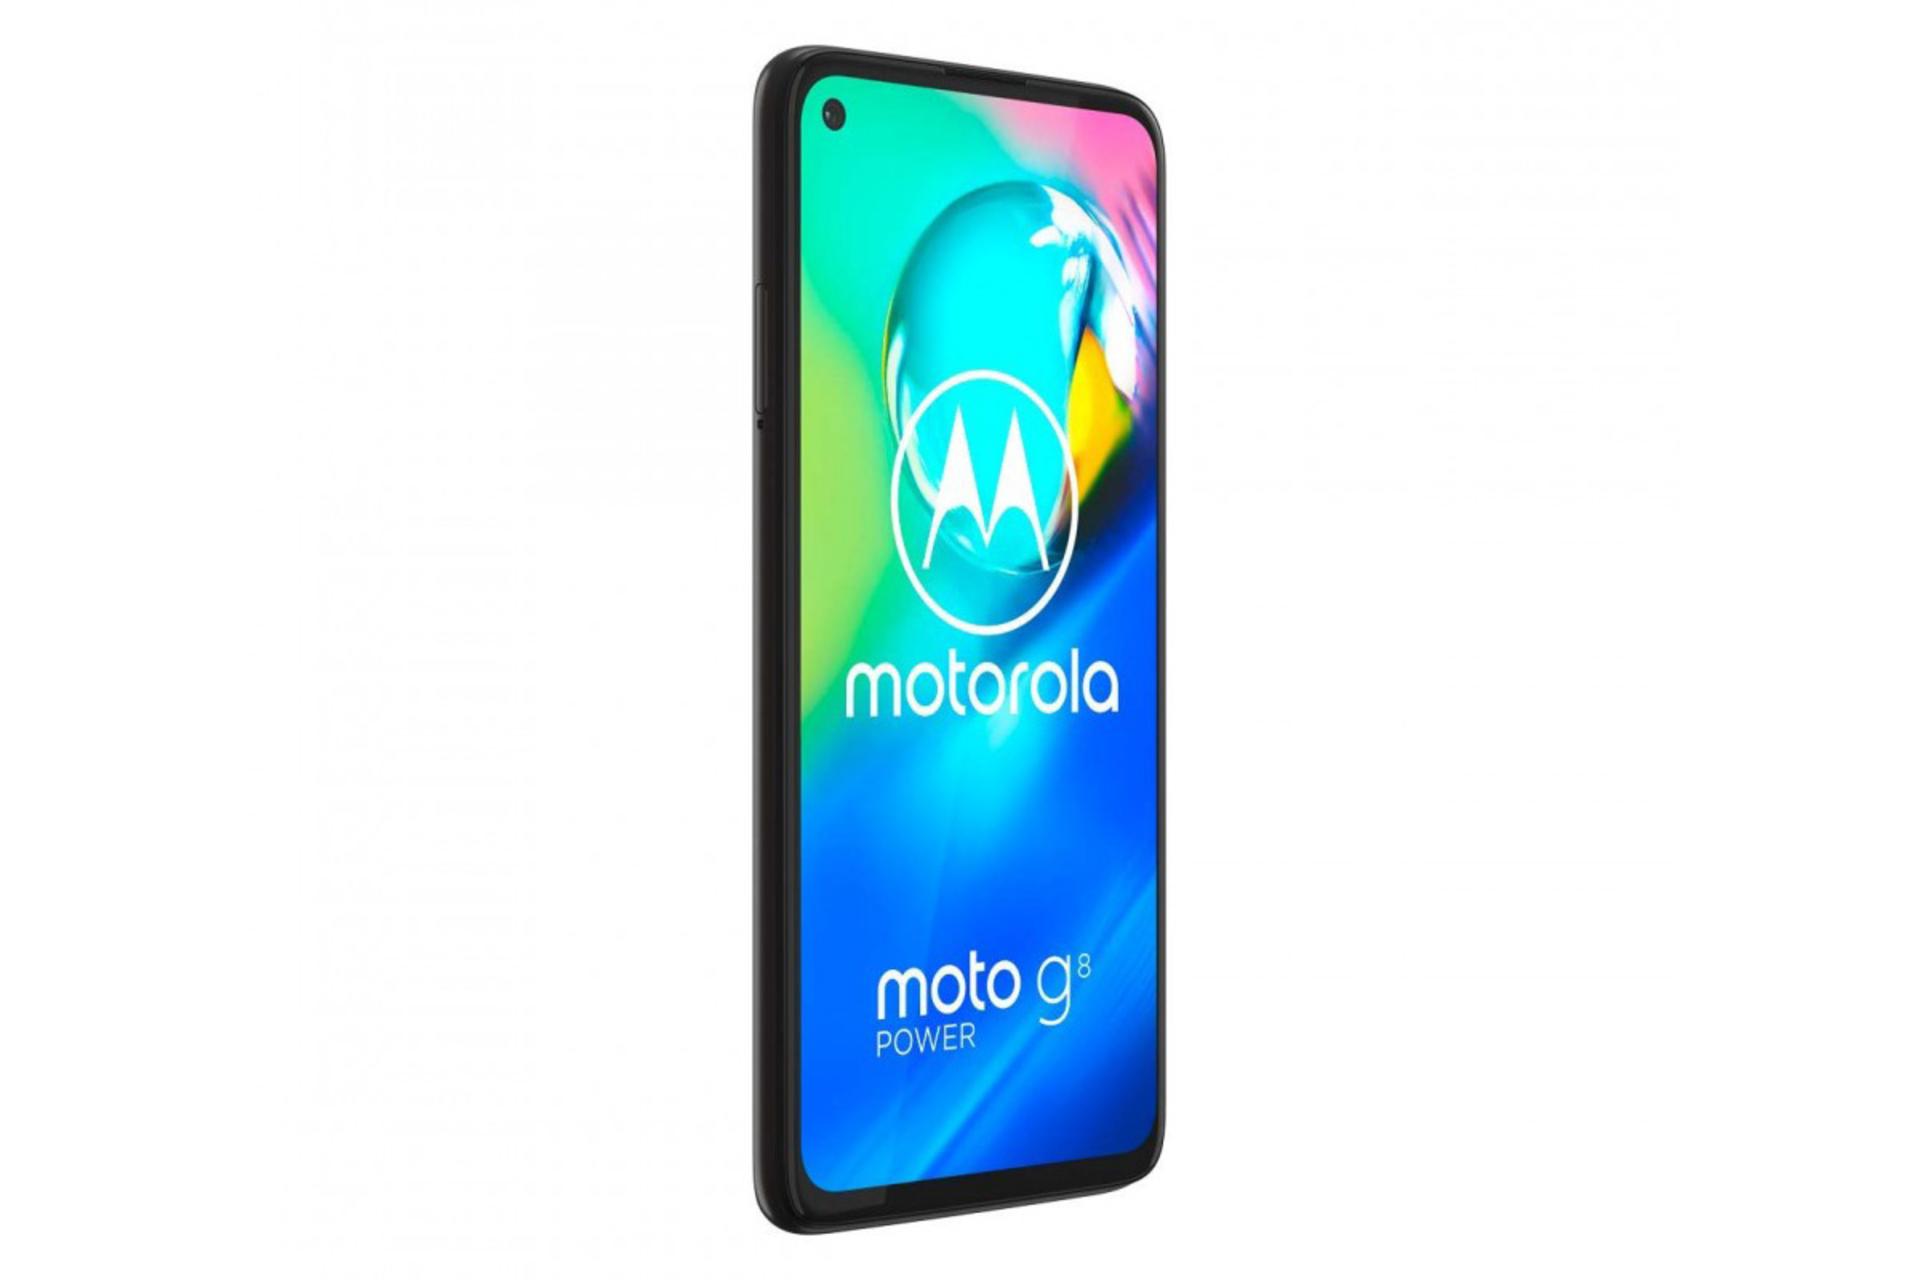 Motorola Moto G8 Power / موتورولا موتو جی 8 پاور